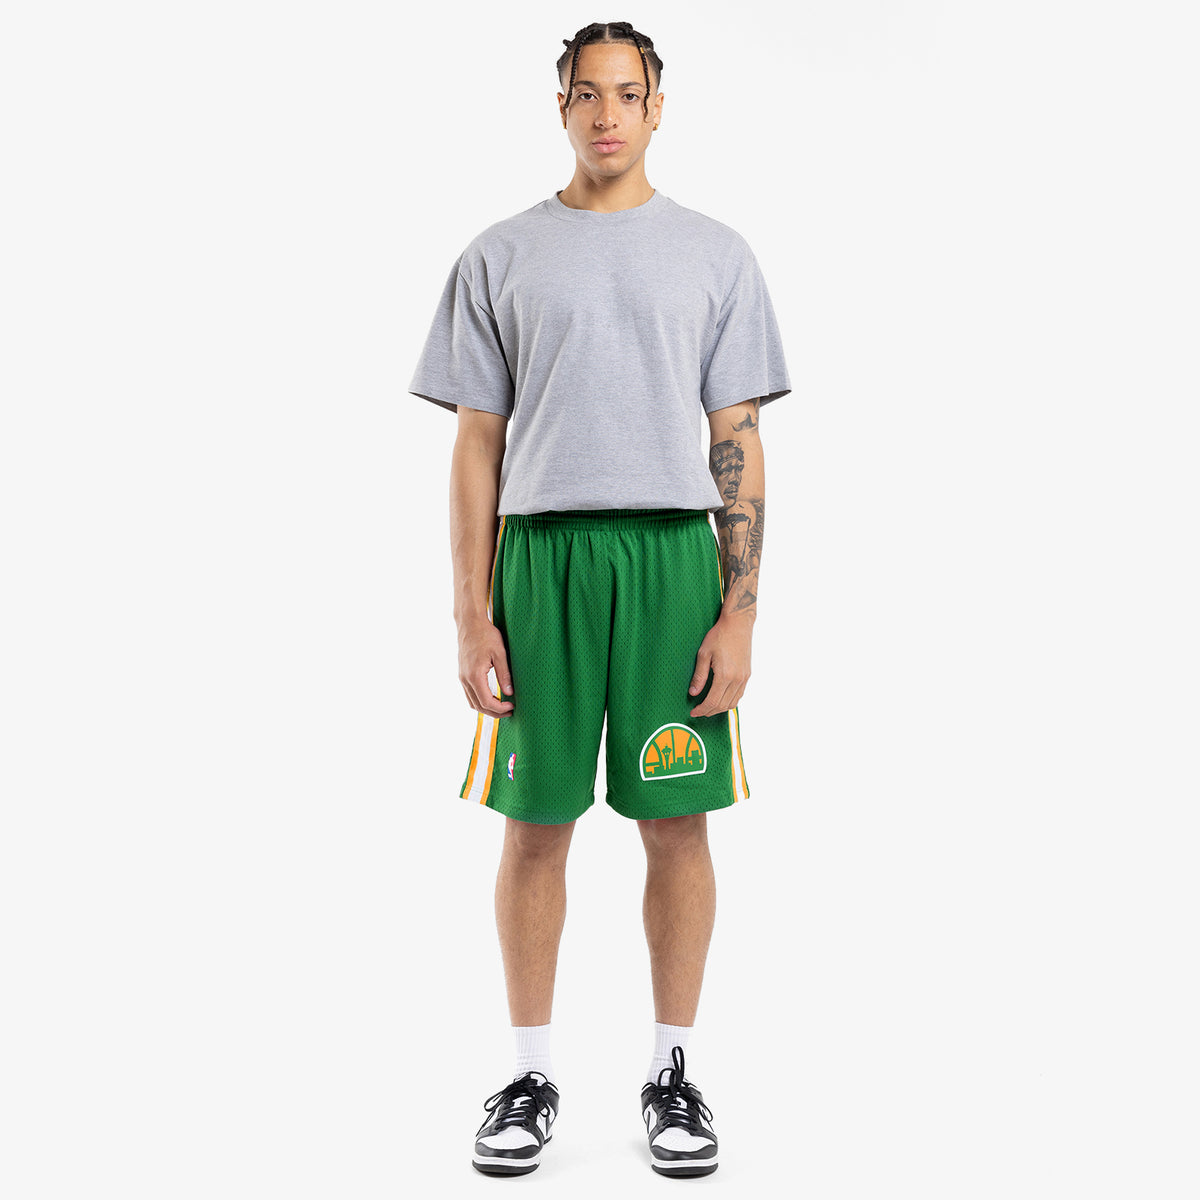 Mitchell & Ness Men's Seattle SuperSonics Swingman Shorts Green XL